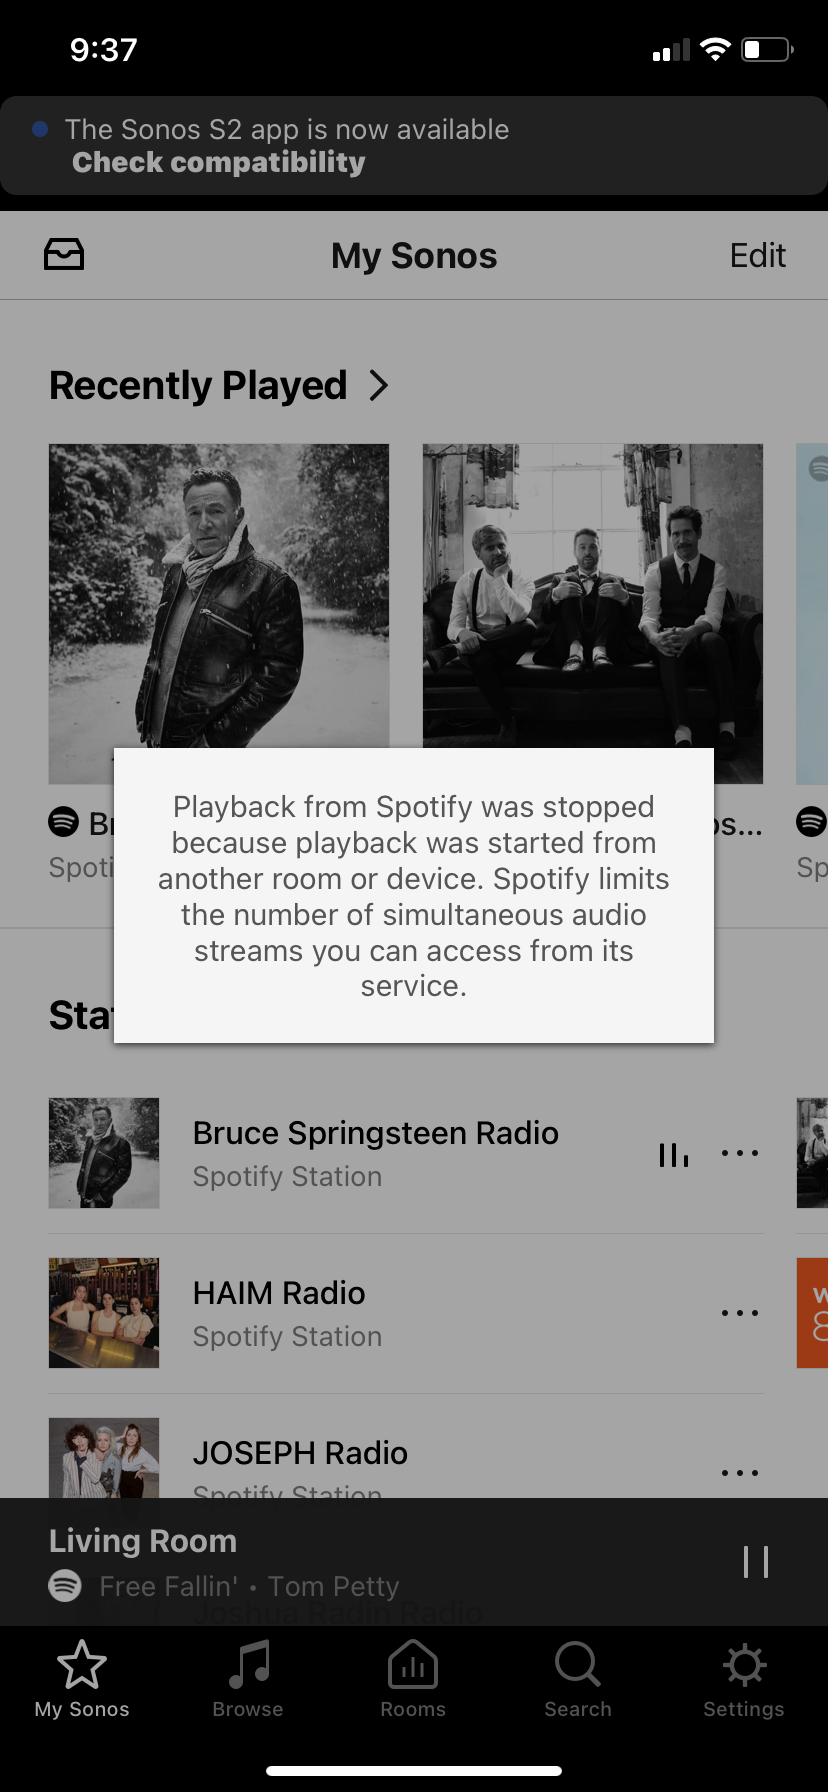 komplet mundstykke øjeblikkelig Have to ask (Alexa) twice to play Spotify Music (S1) | Sonos Community